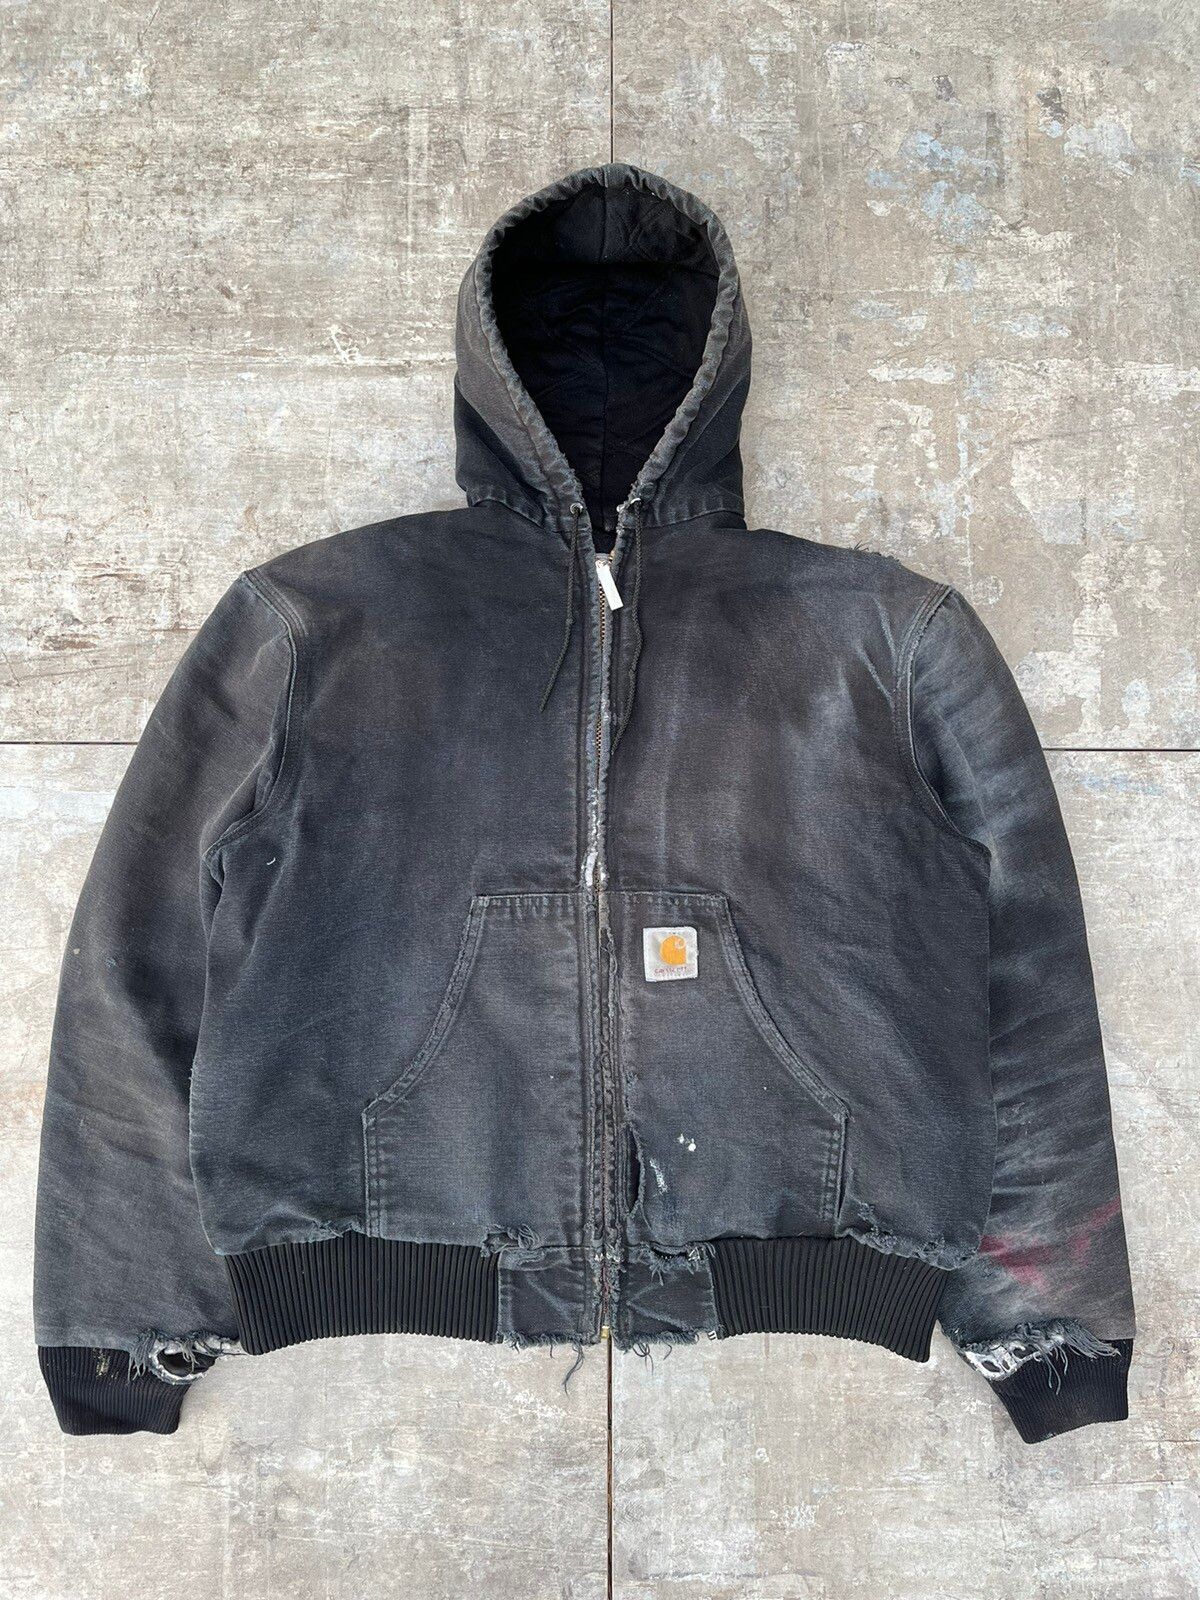 Vintage Vintage 90s Faded Black Carhartt Work Jacket Size US L / EU 52-54 / 3 - 1 Preview